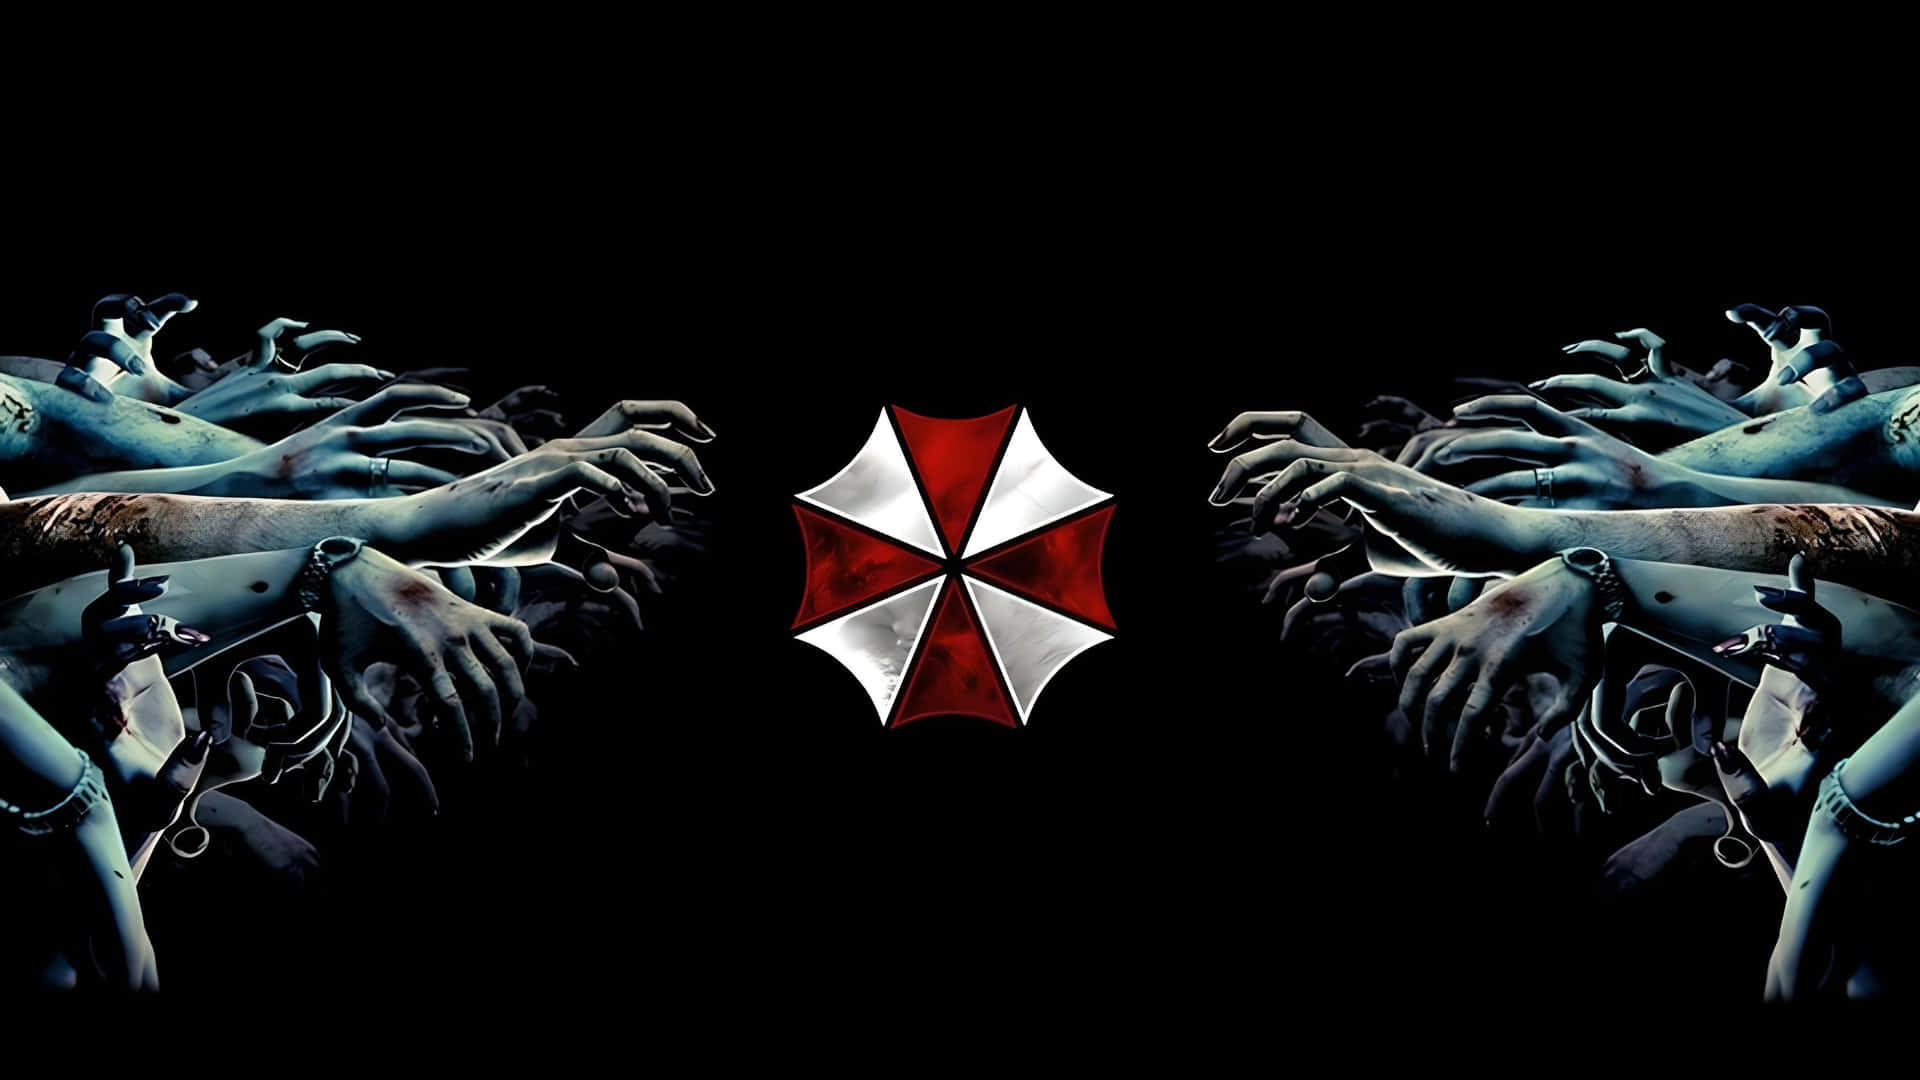 100+] Resident Evil Umbrella Corporation Wallpapers